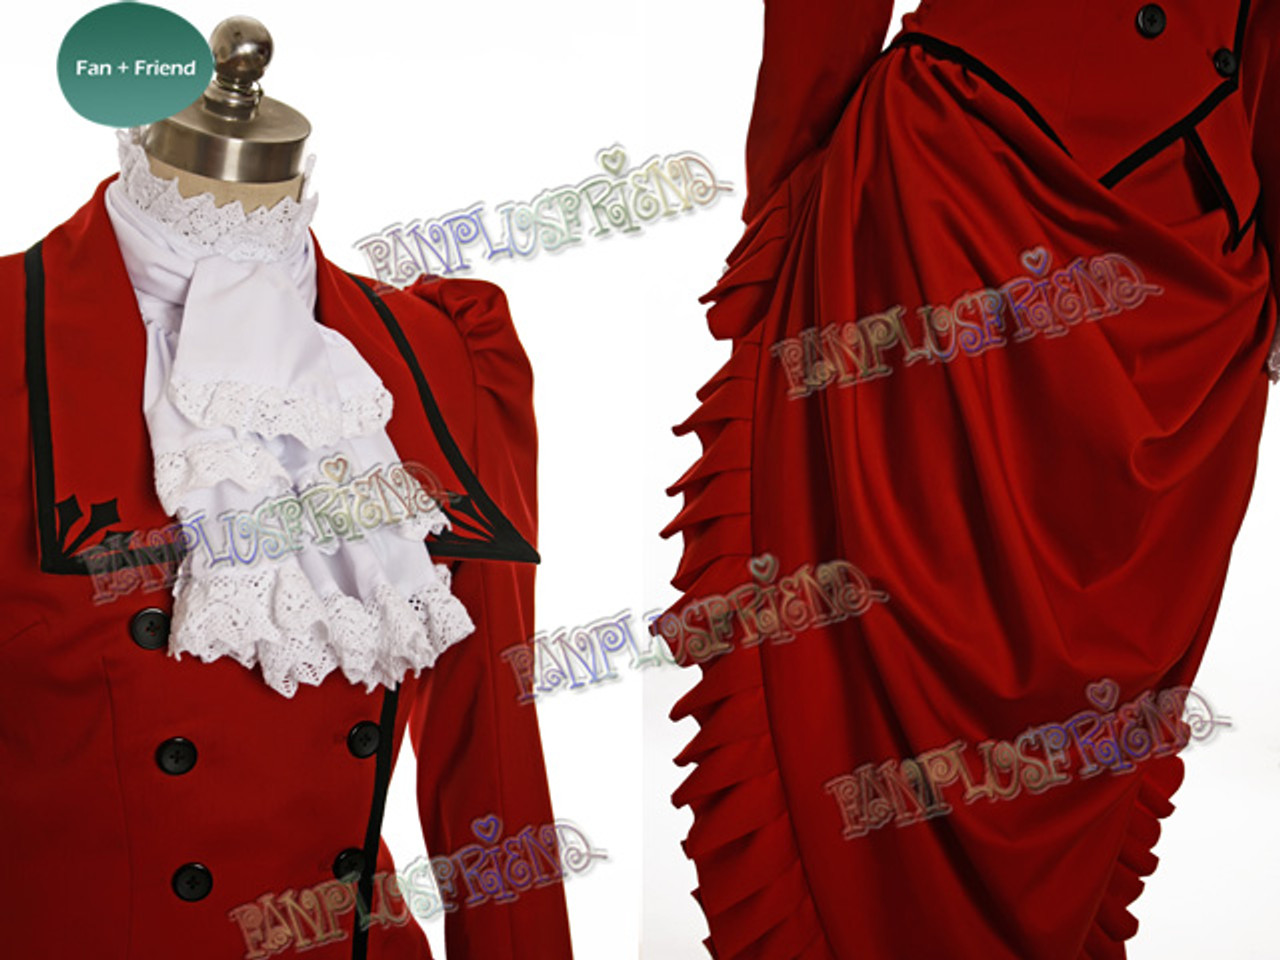 Madame Red from Kuroshitsuji Costume, Carbon Costume